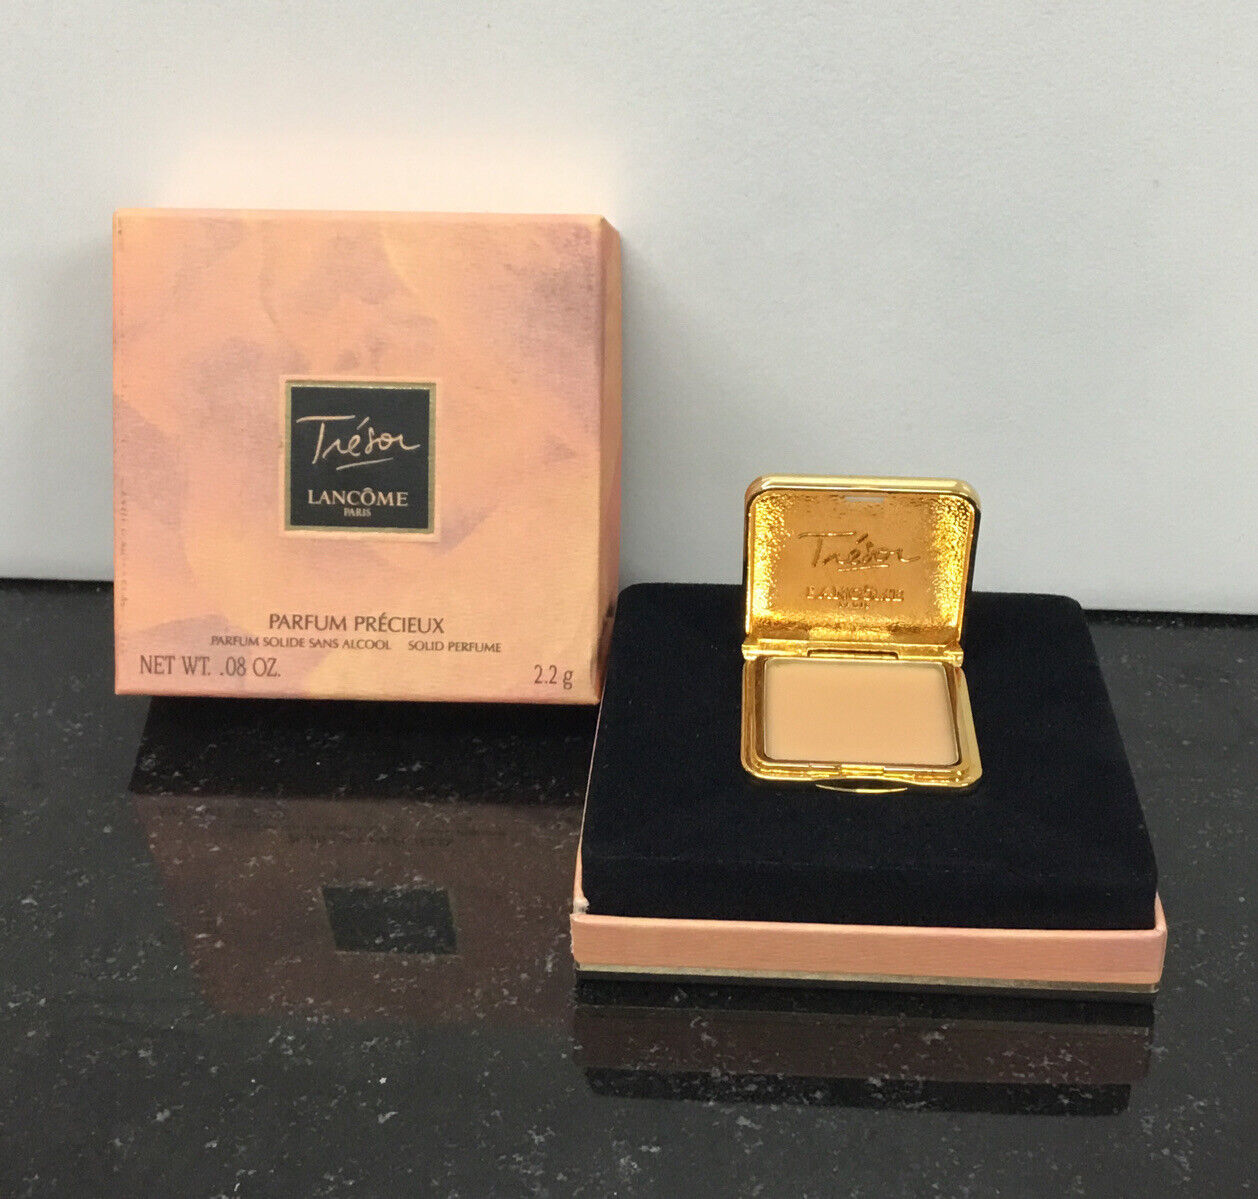 Tresor Lancome Paris collectible parfum .08 oz France Solid Perfume Vintage